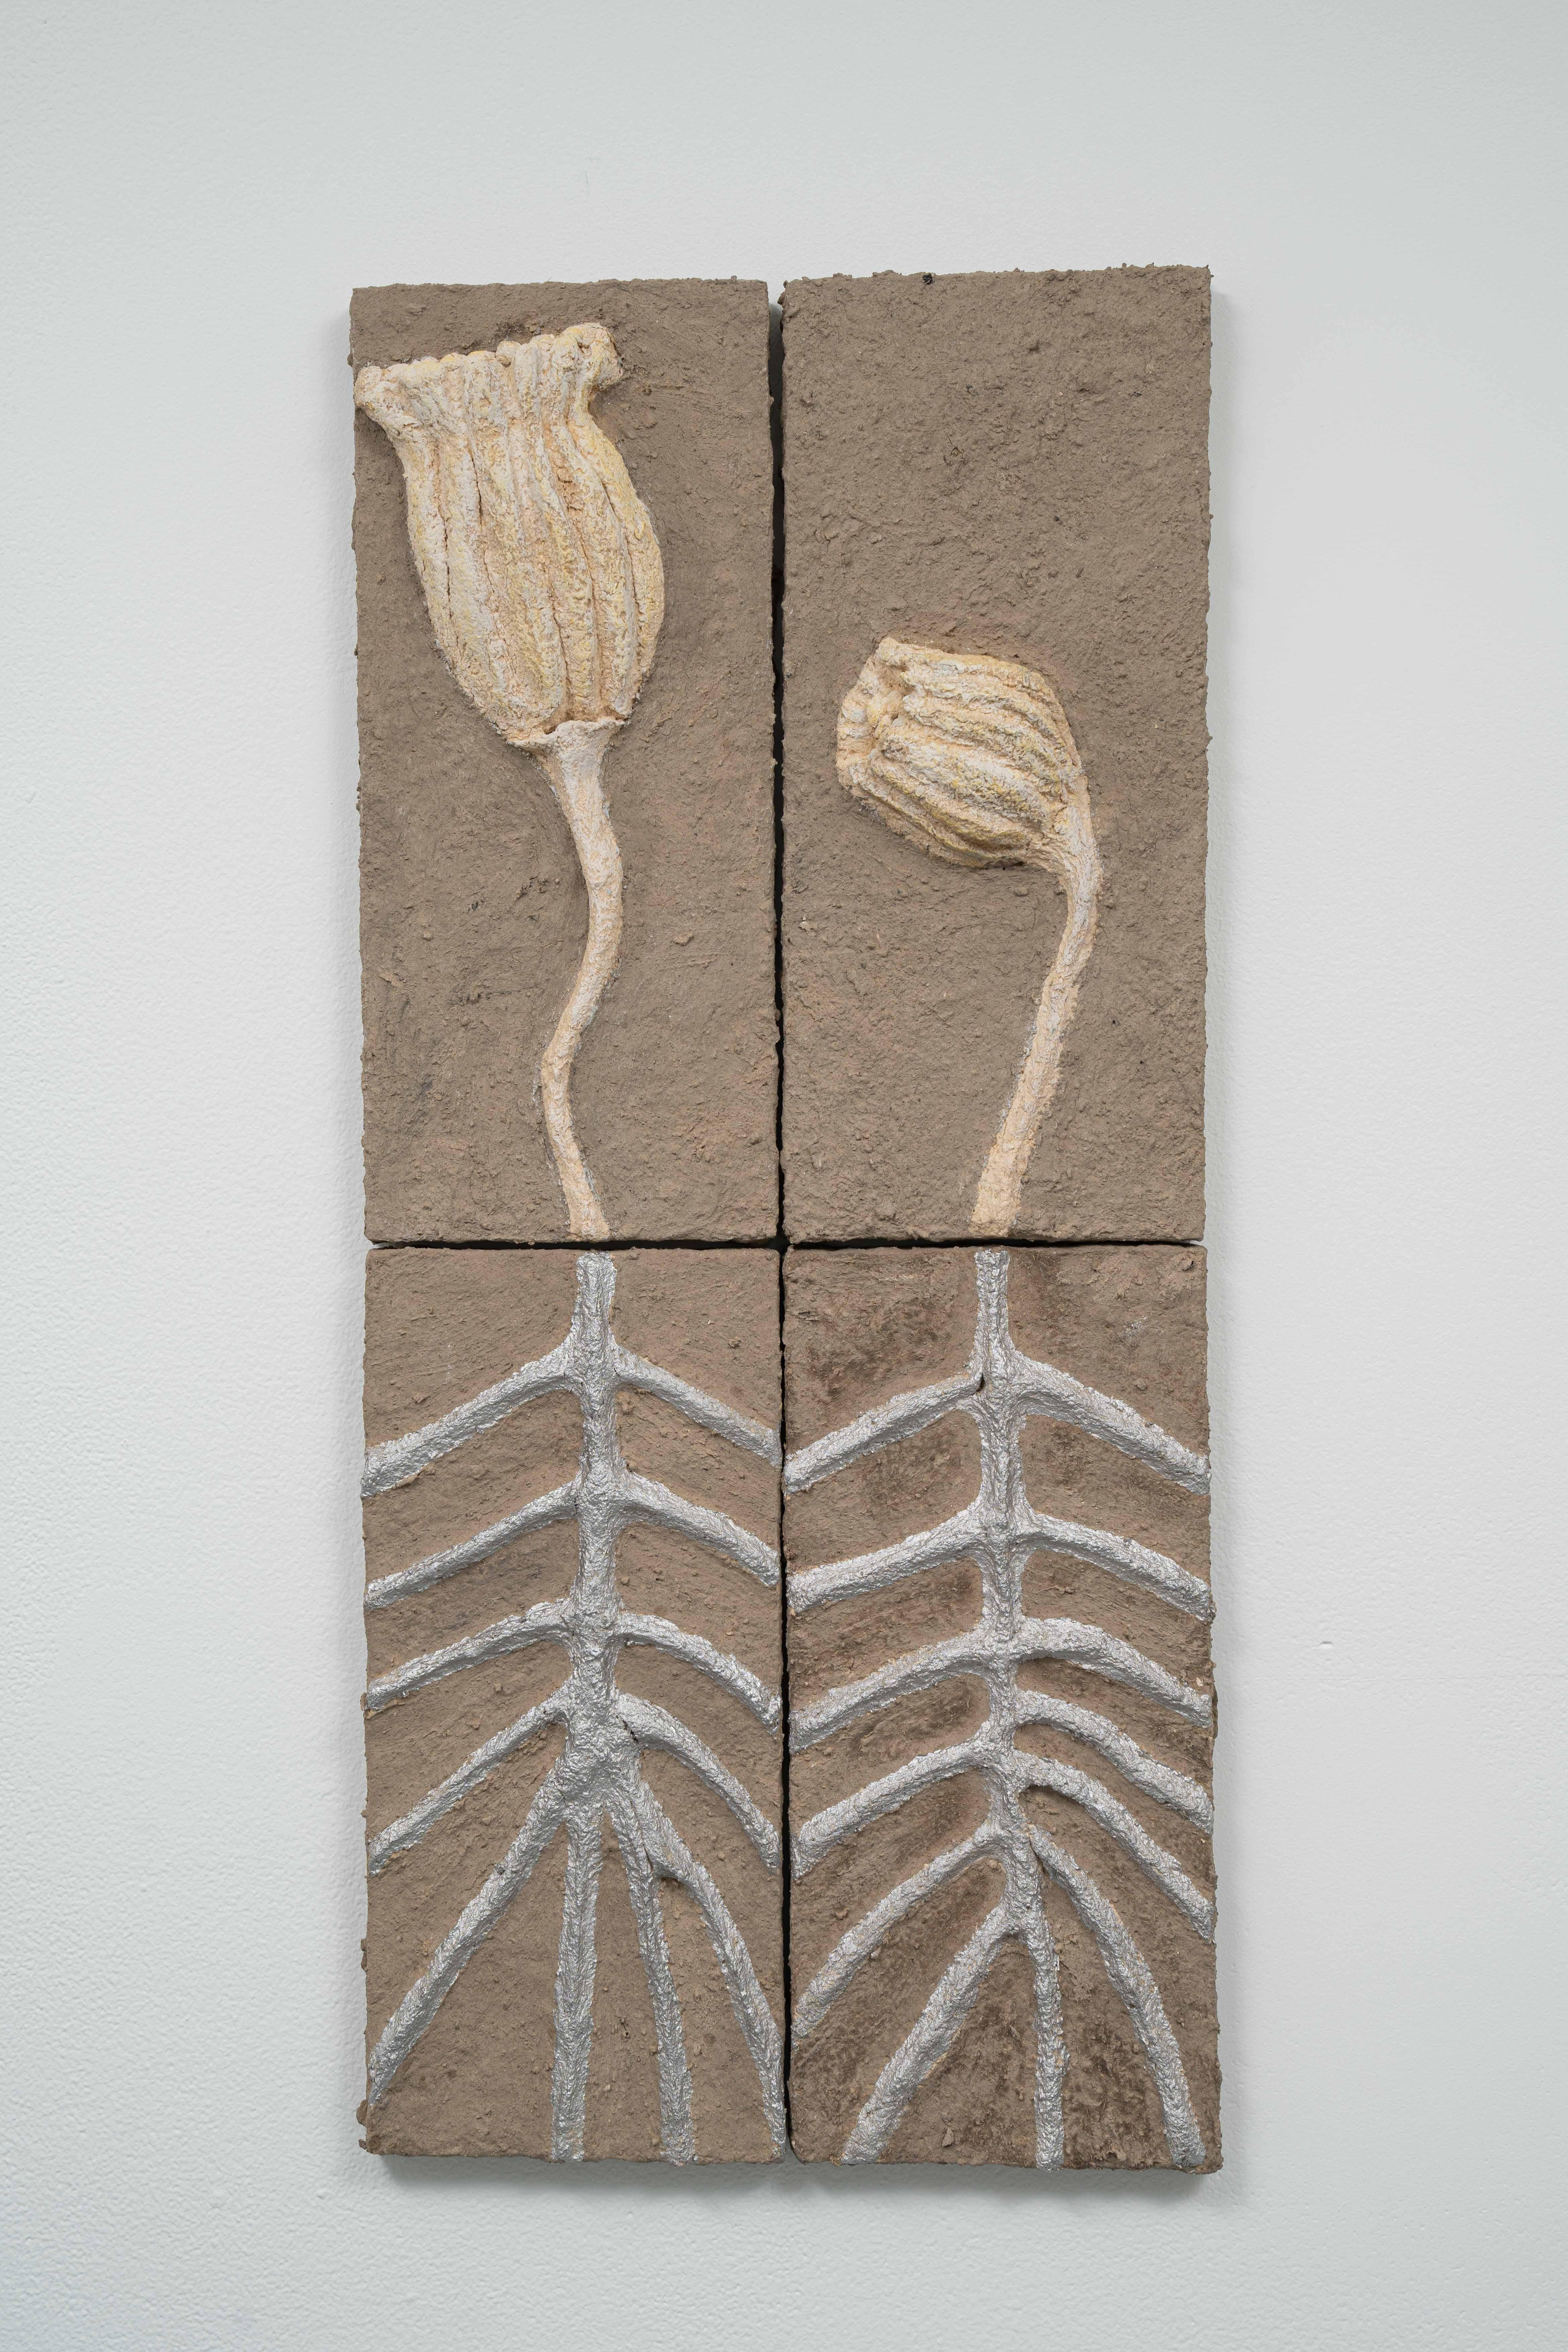 Loren Eiferman Figurative Sculpture – Wood Wall Sculpture: Sprechende Roots #2"